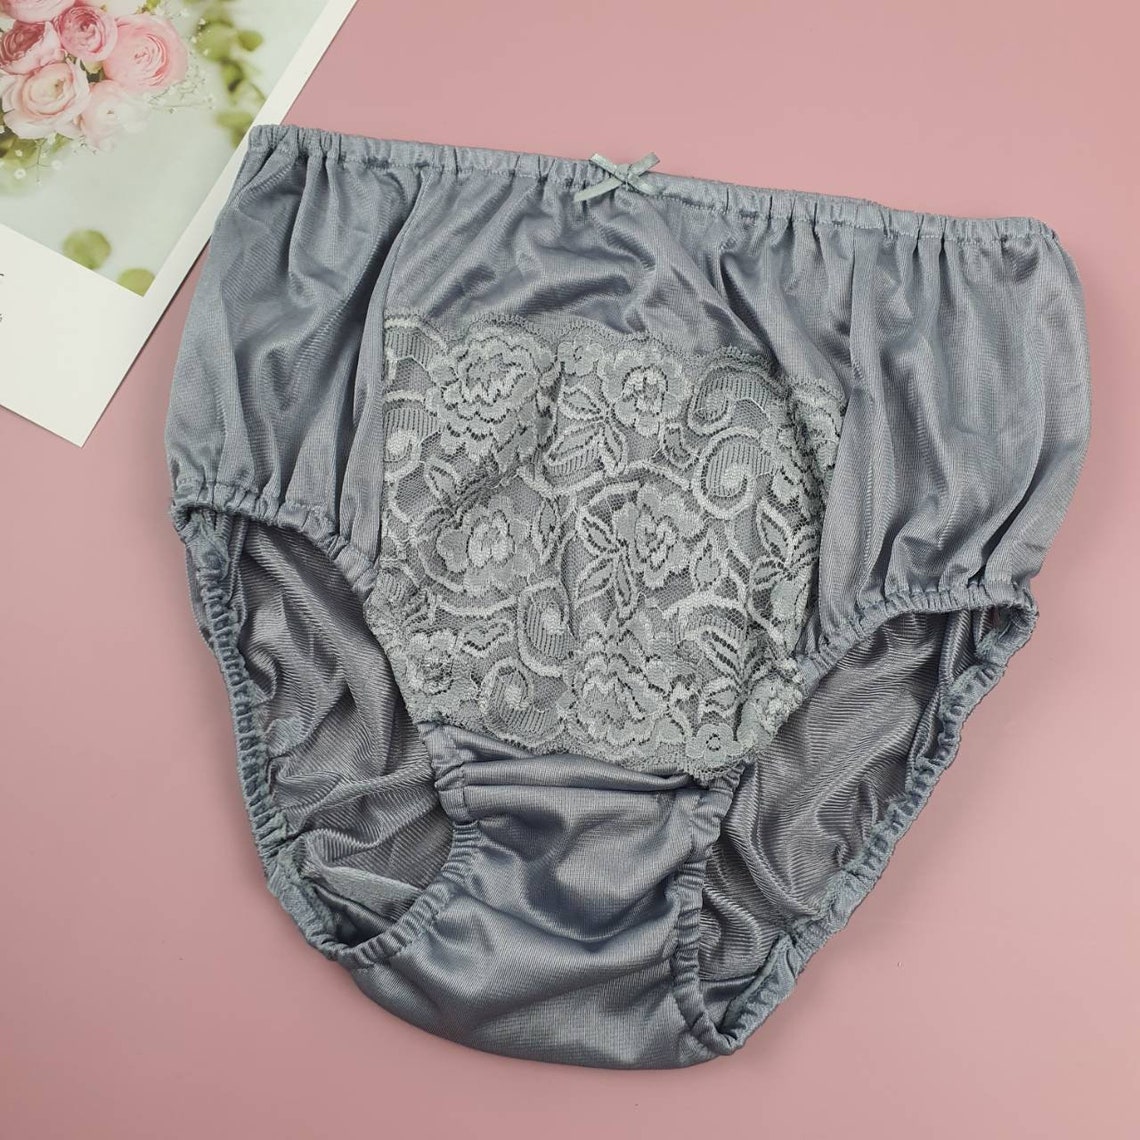 XL pantiesGray vintage panties | Etsy